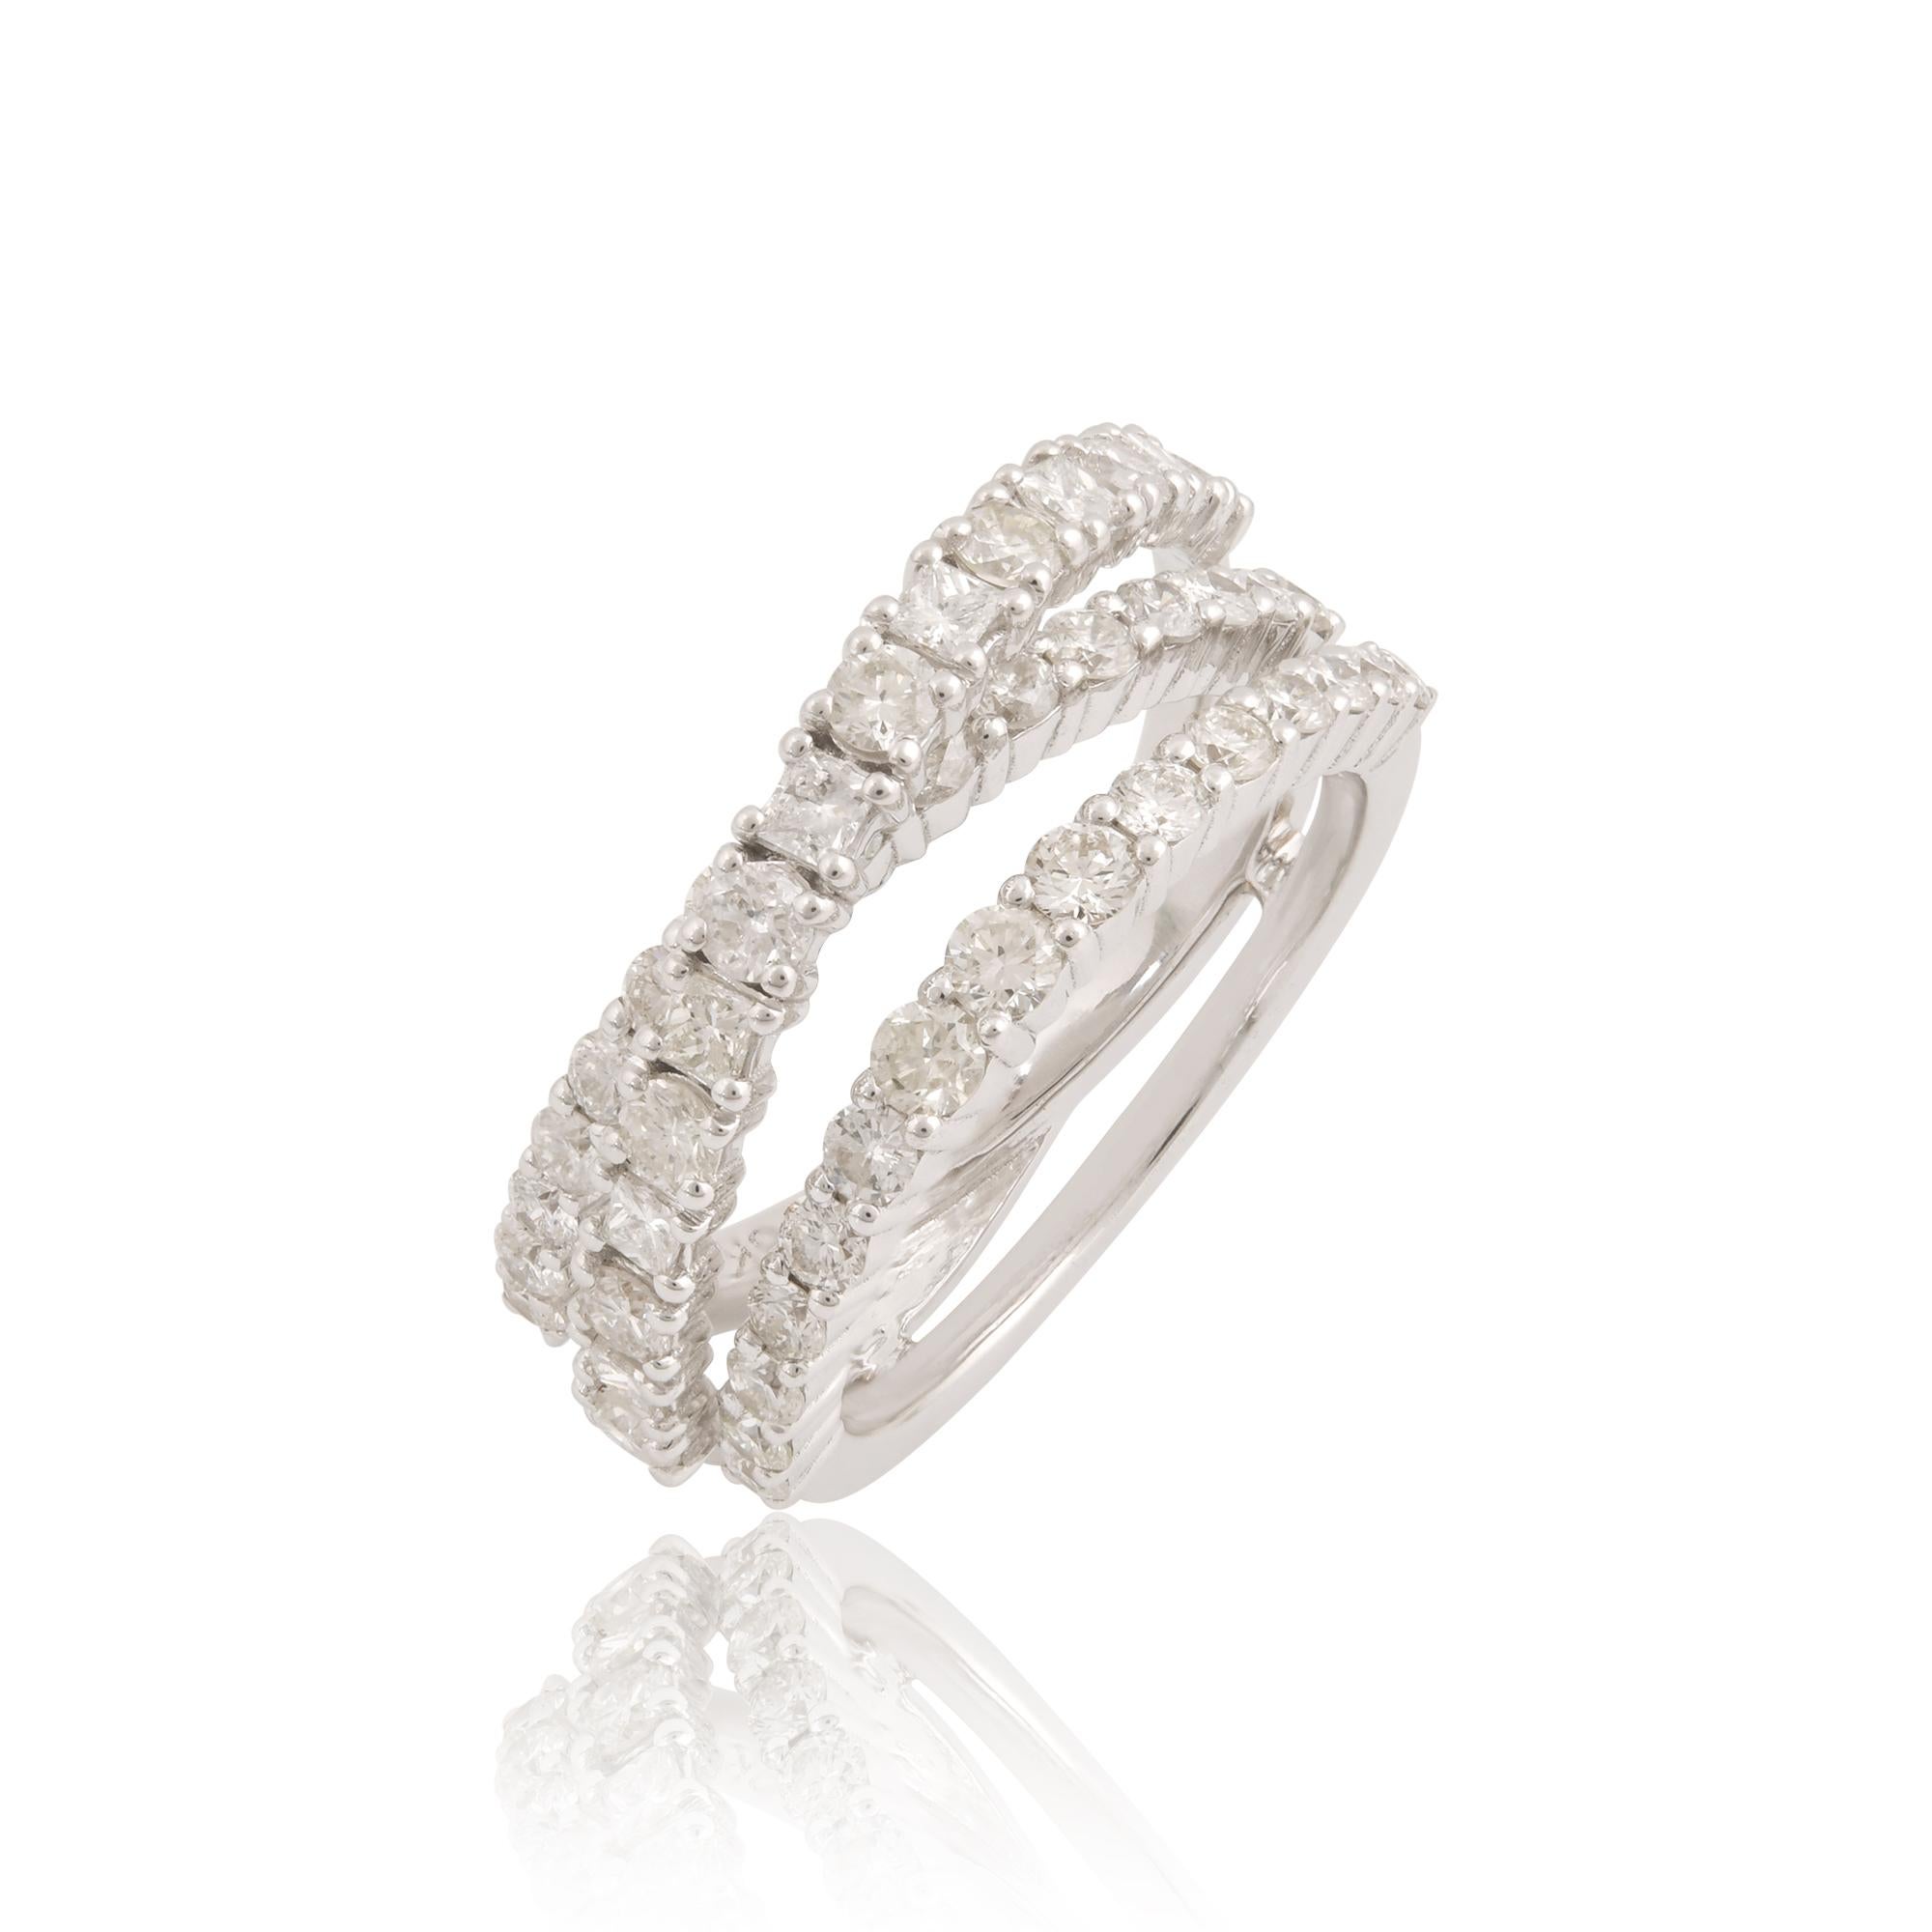 For Sale:  1.4 Carat SI/HI Diamond Criss Cross Ring 18 Karat White Gold Handmade Jewelry 2